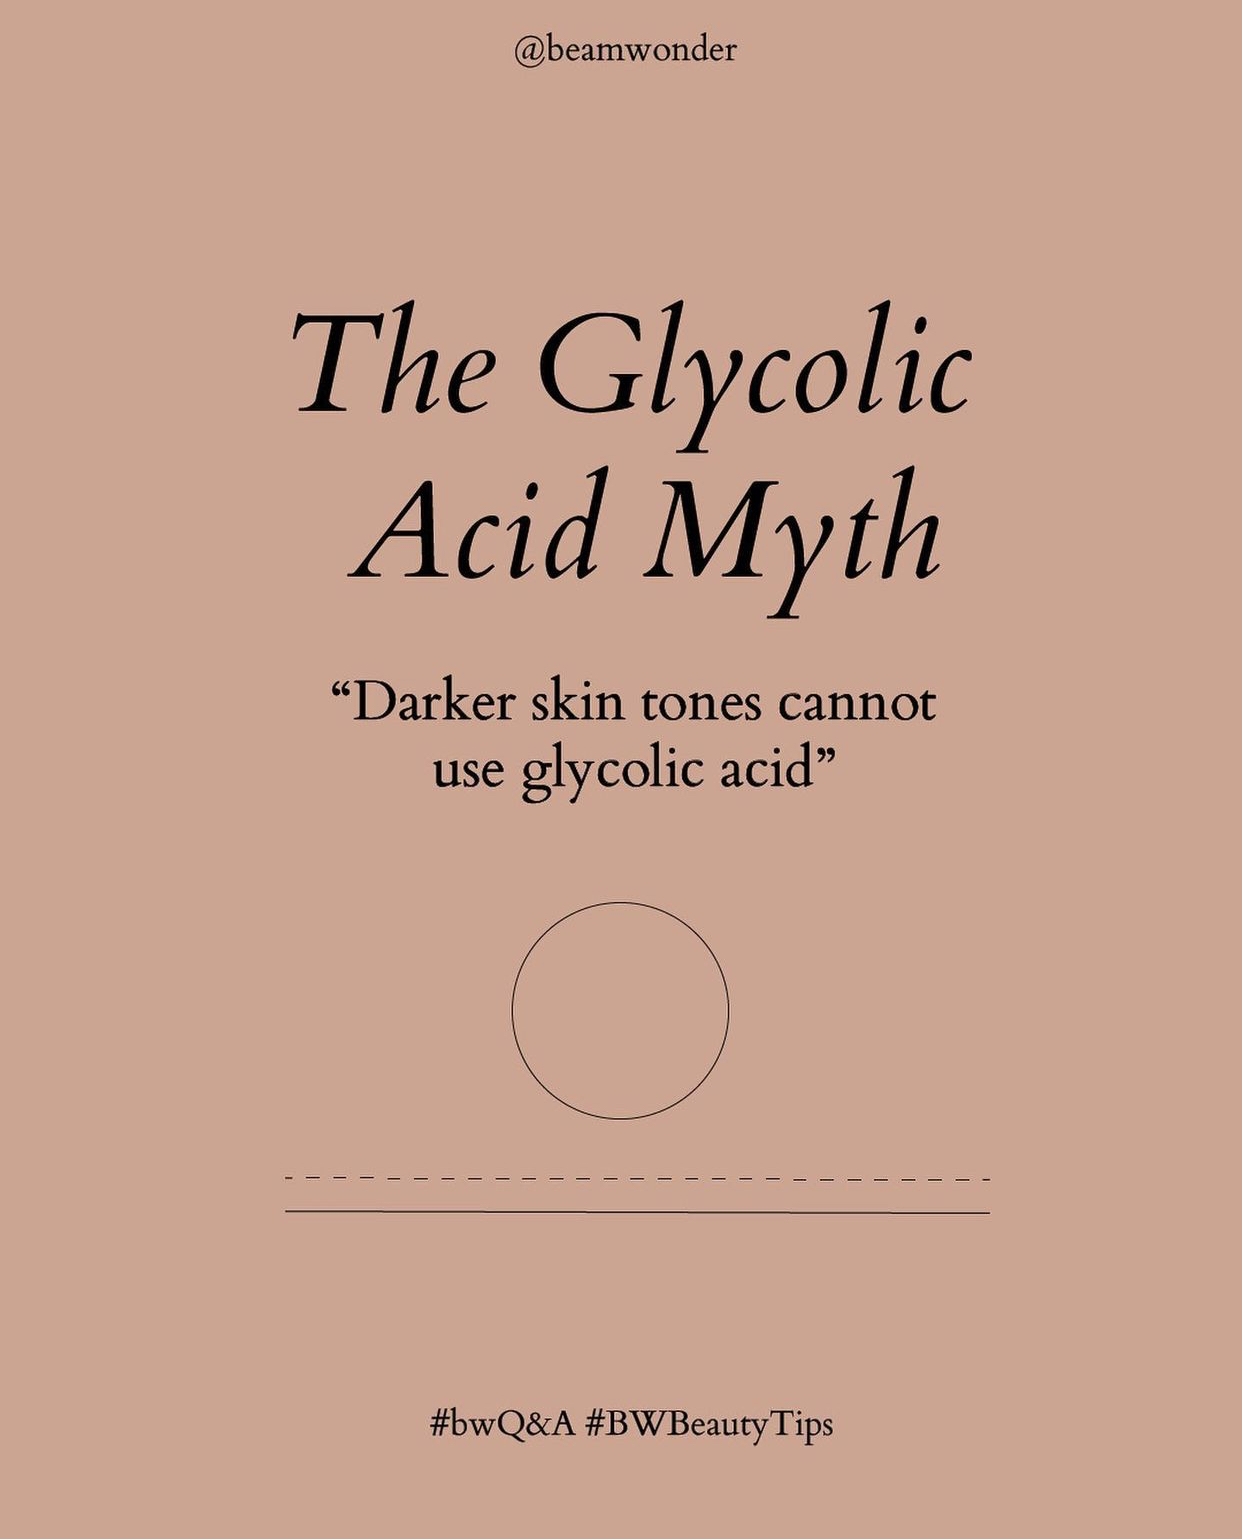 The Glycolic Acid Myths